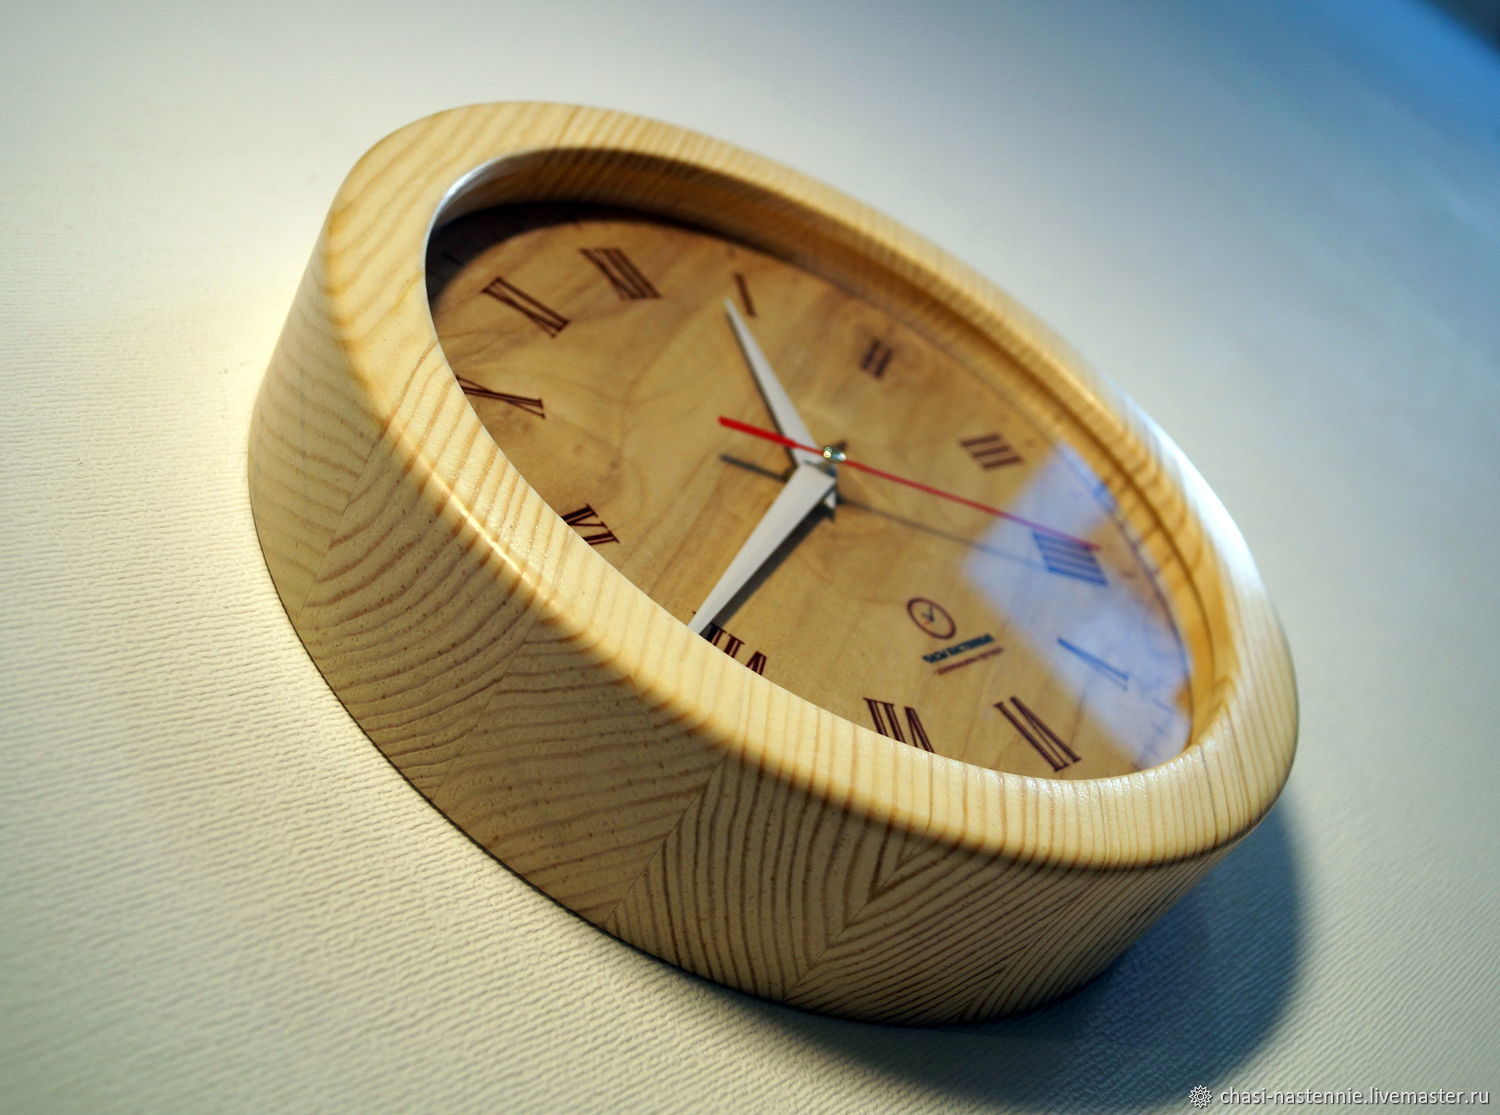 Открытый кл часы. Часы экостиль. Часы настенные экостиль. Часы из дерева. Часы в эко стиле.